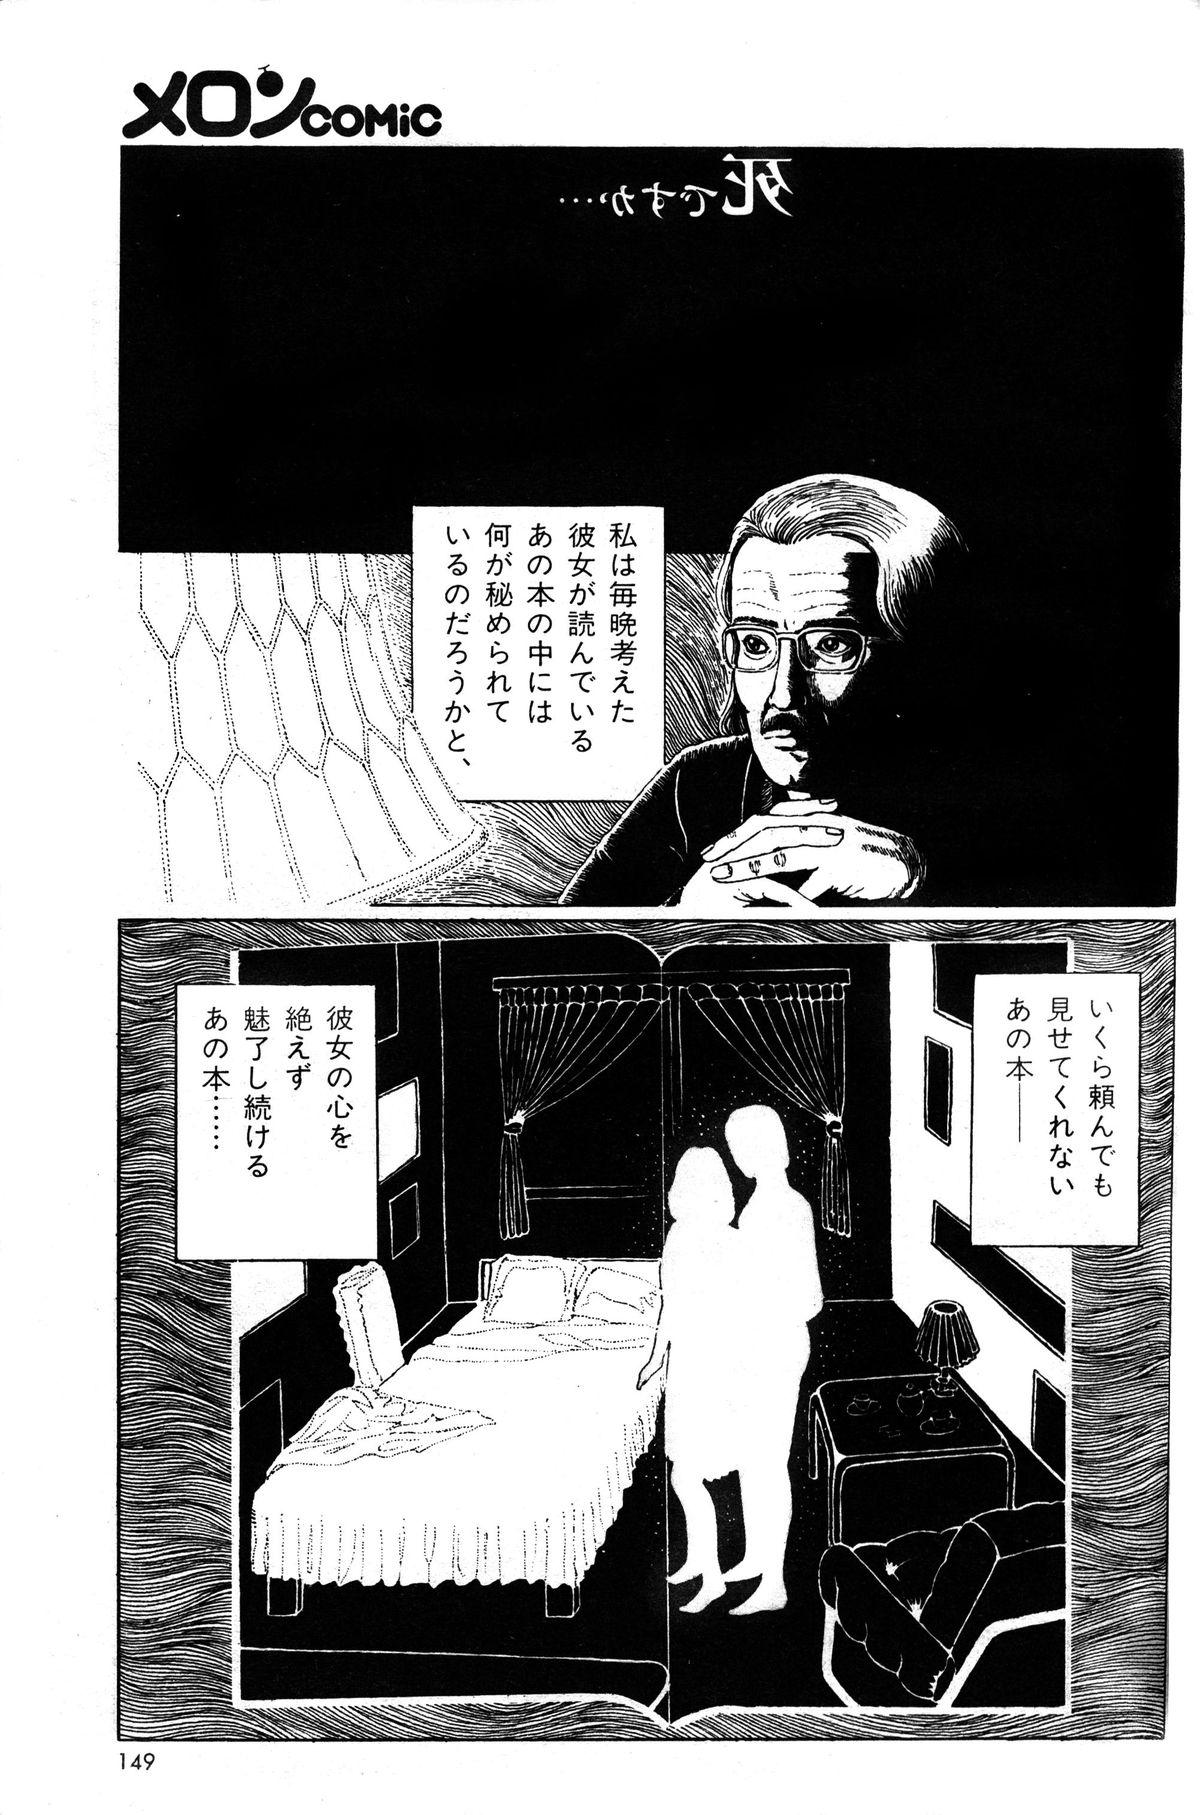 Melon Comic No. 01, メロンコミック 昭和59年6月号 150